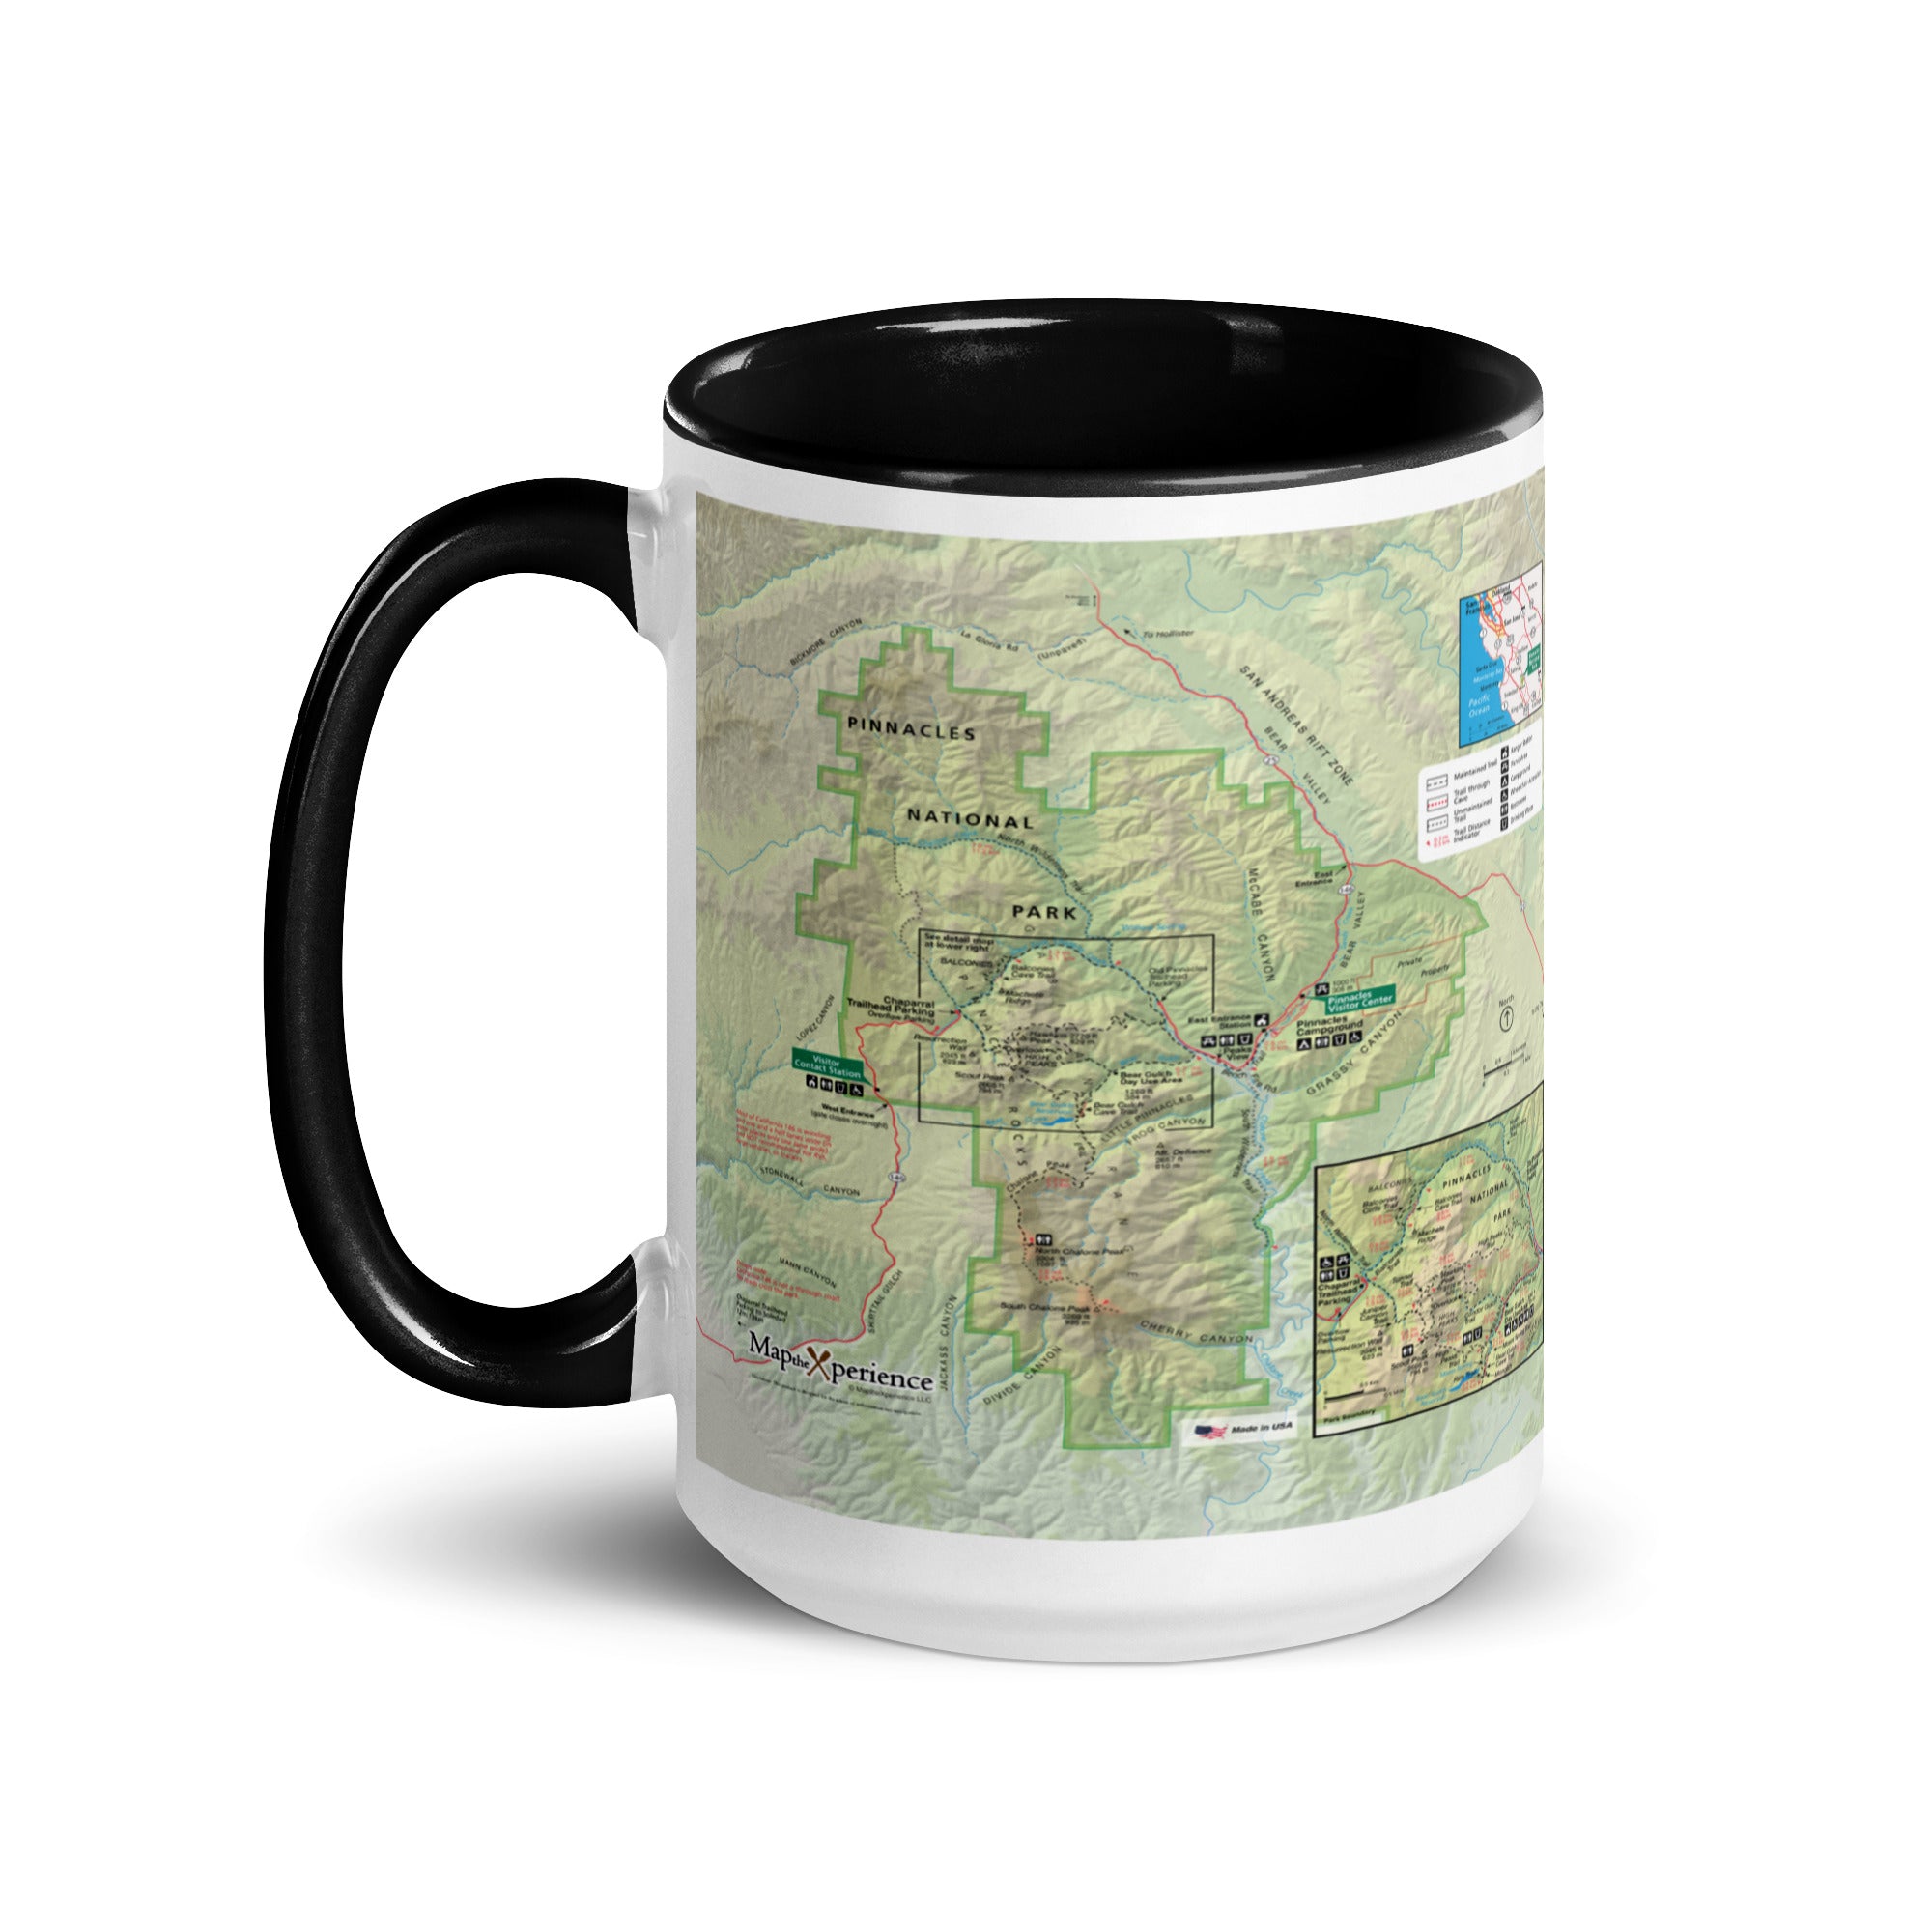 Pinnacles National Park Mug with Black Inside